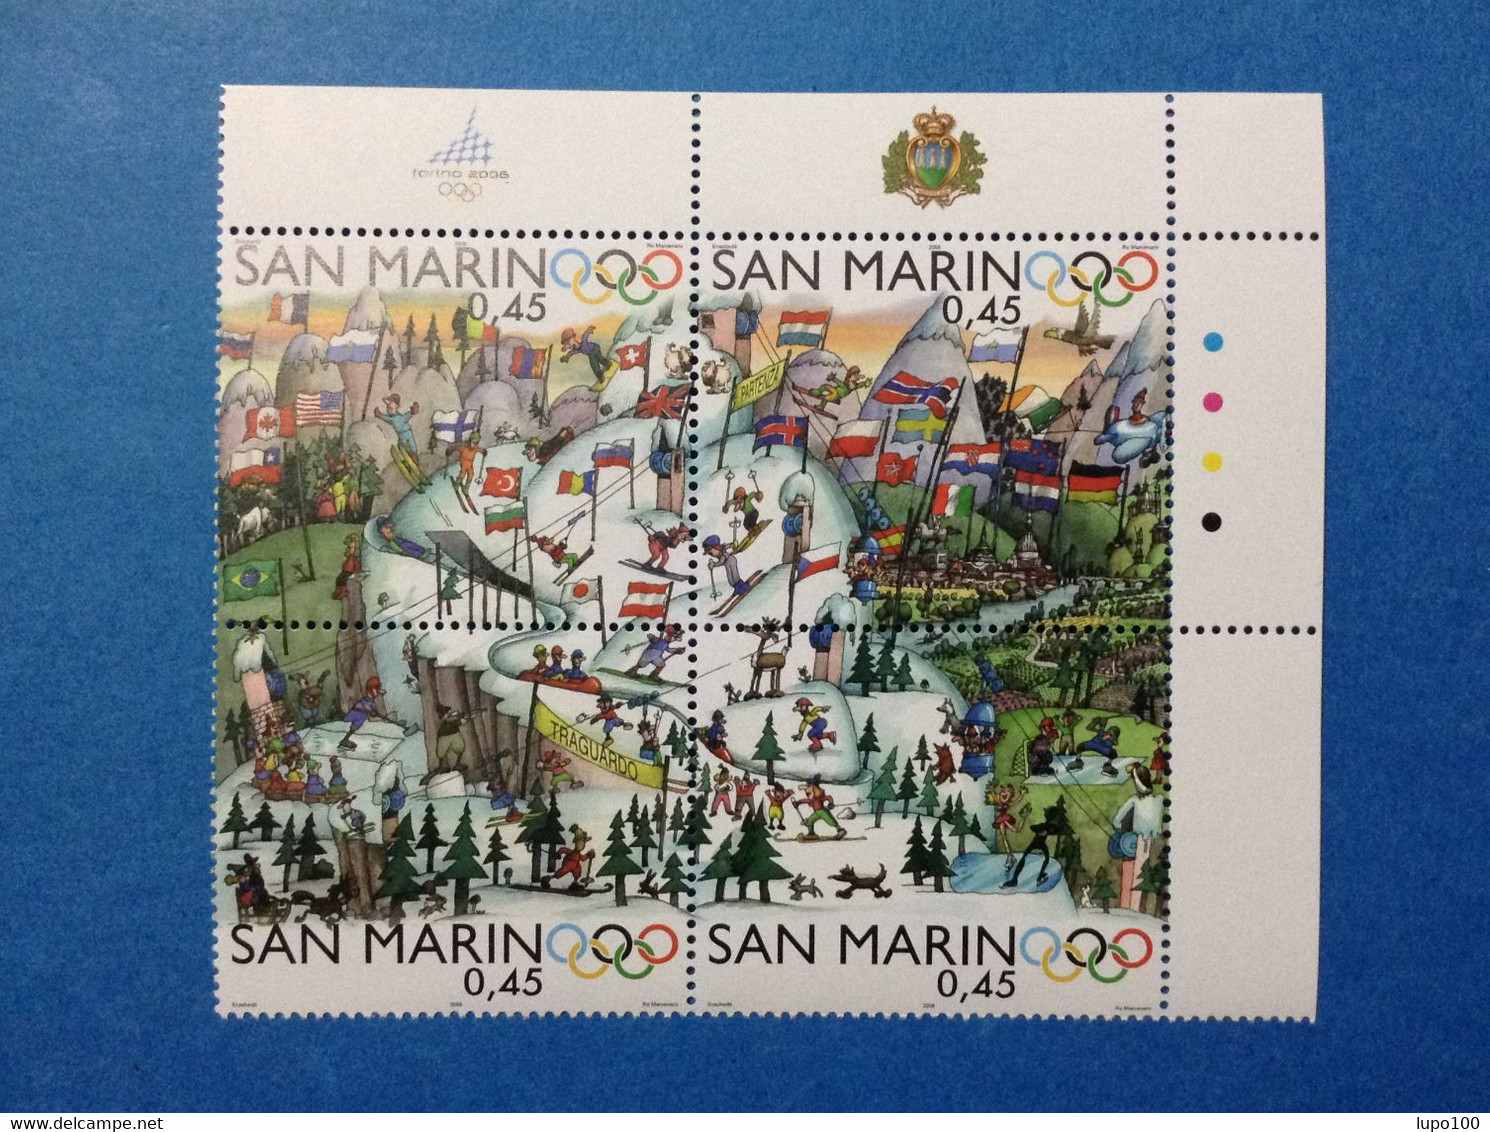 2006 SAN MARINO FRANCOBOLLI NUOVI IN BLOCCO STAMPS NEW MNH** - OLIMPIADI GIOCHI OLIMPICI INVERNALI TORINO - - Unused Stamps